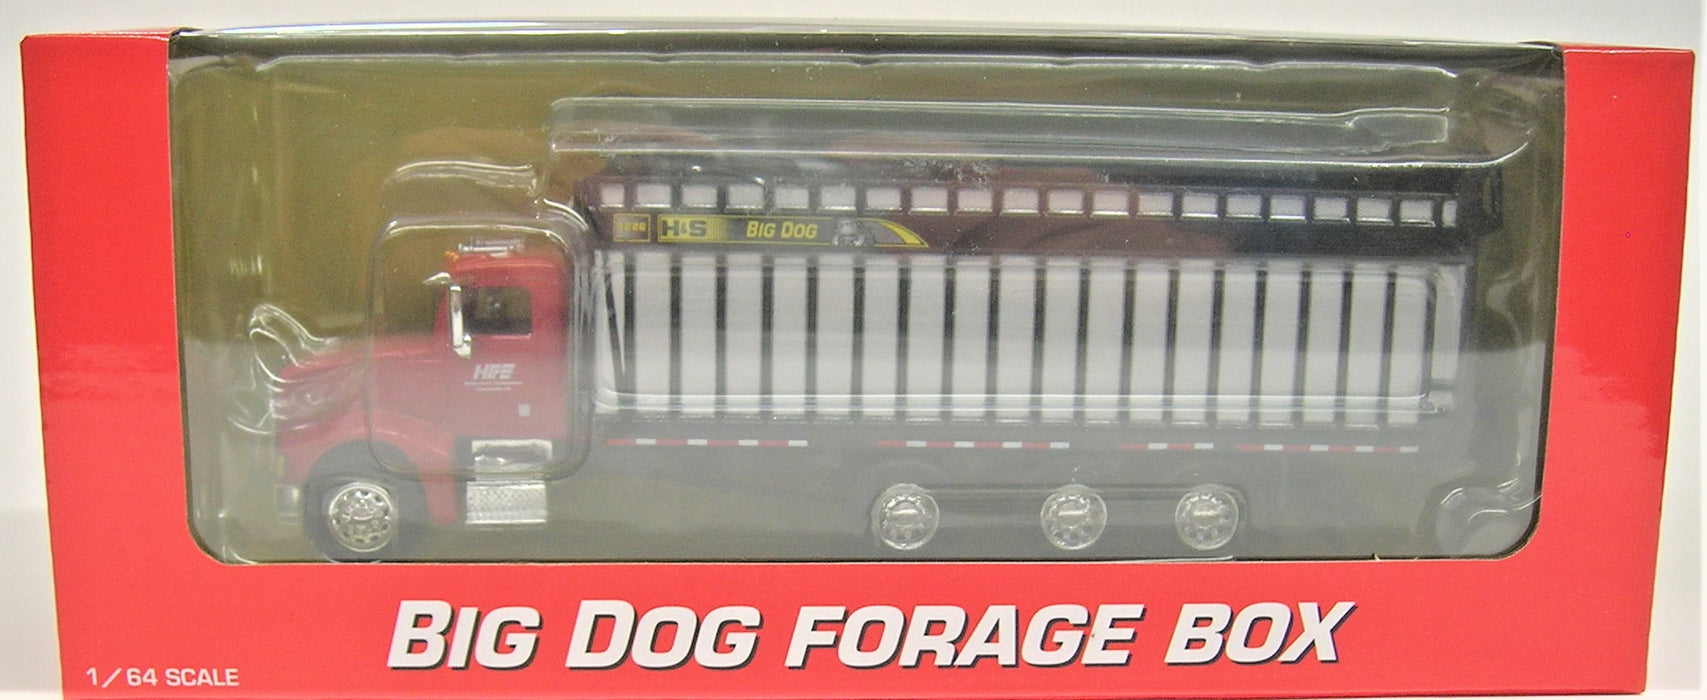 1/64 H&S 1226 BIG DOG ON RED PETERBILT 385 TRUCK